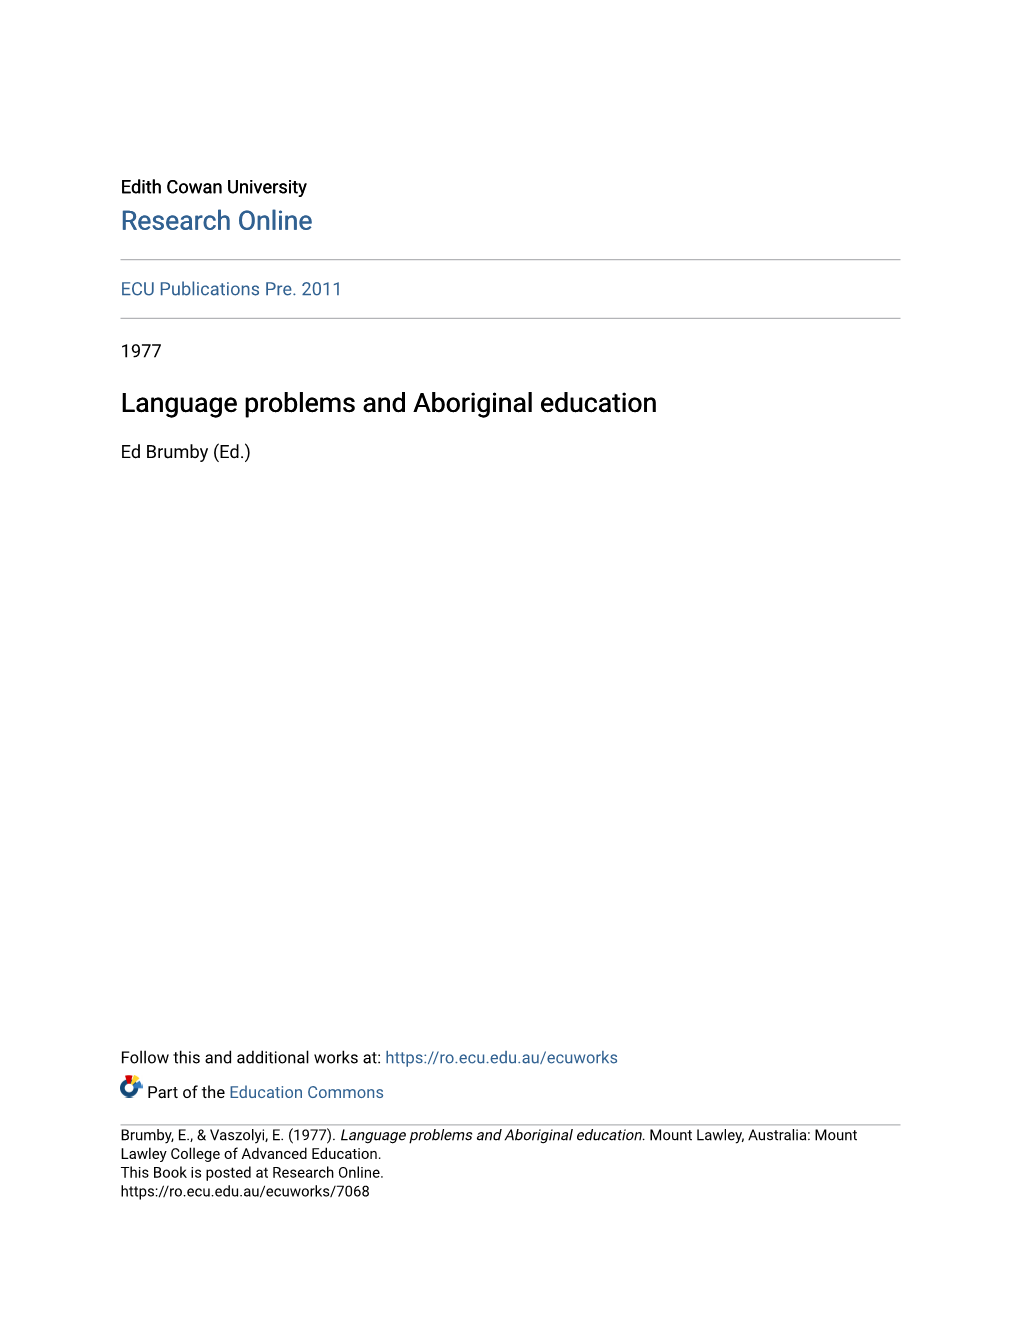 Language Problems and Aboriginal Education